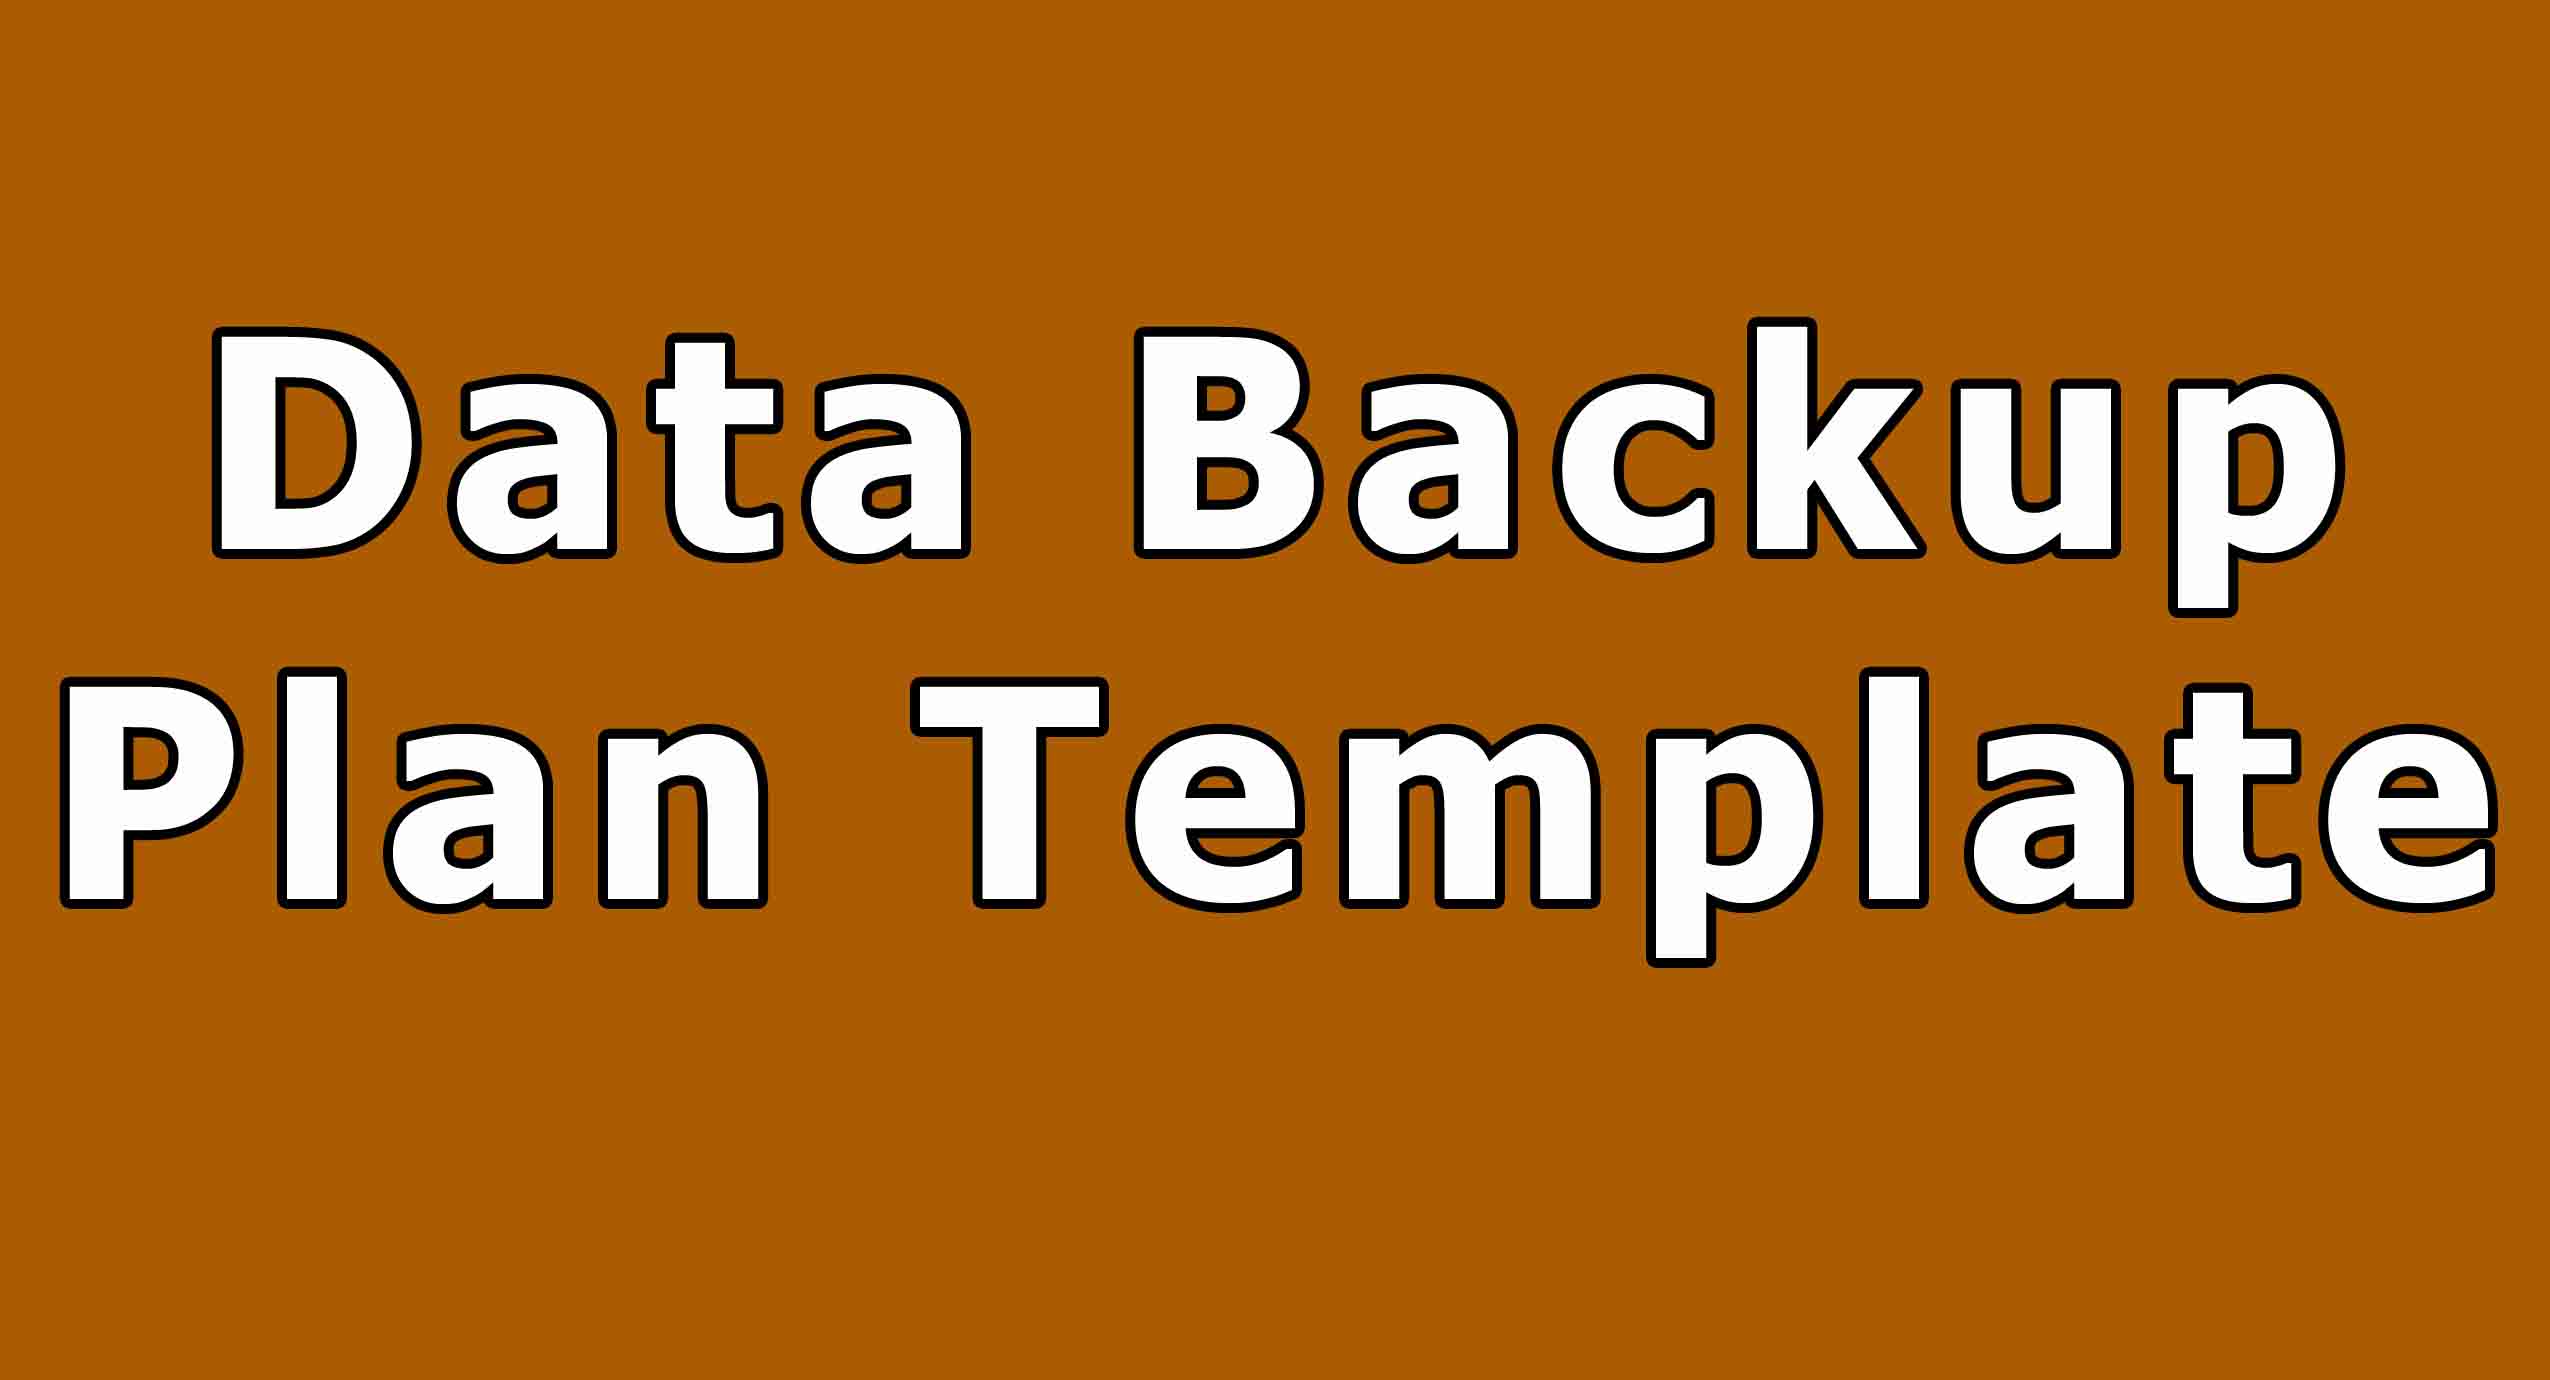 Data Backup Plan Template